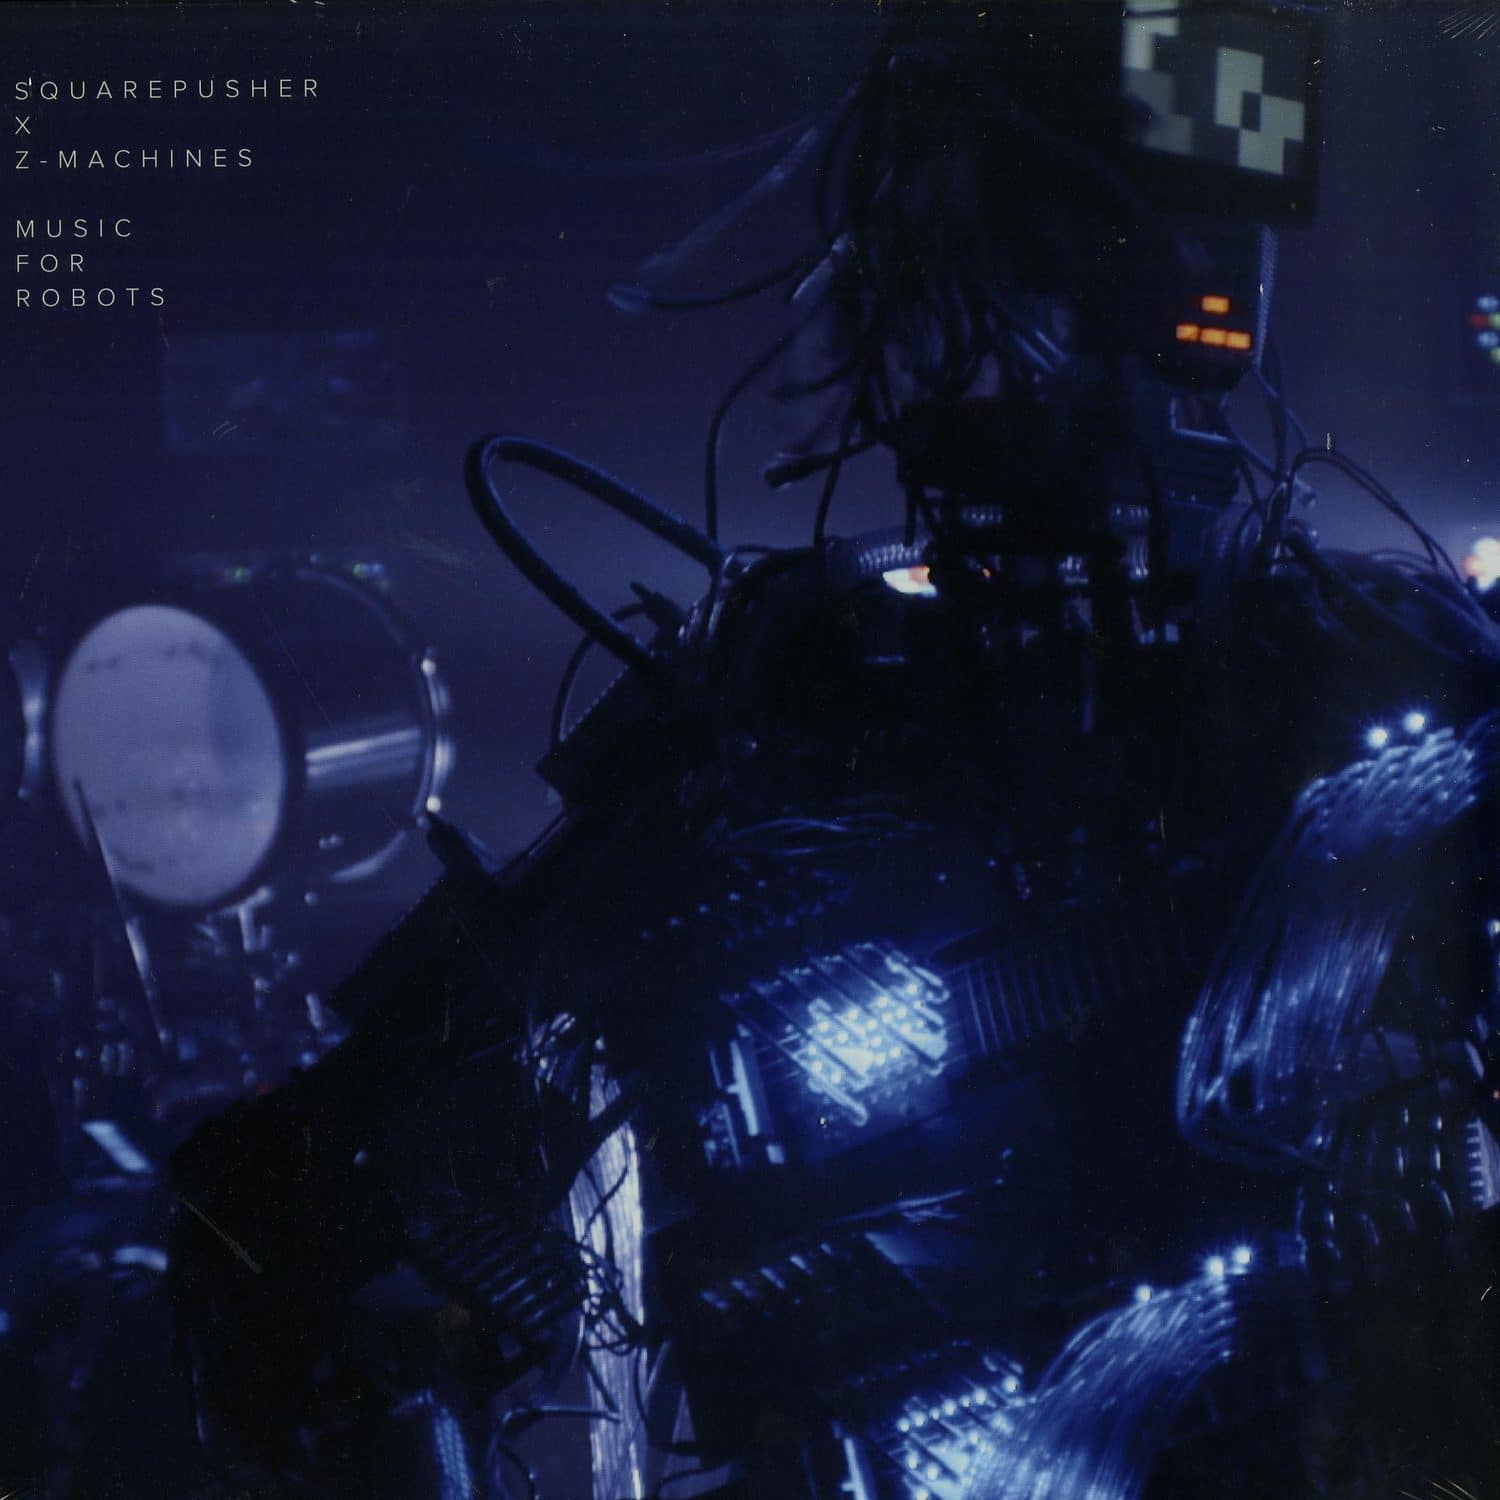 Squarepusher x Z-Machines - MUSIC FOR ROBOTS